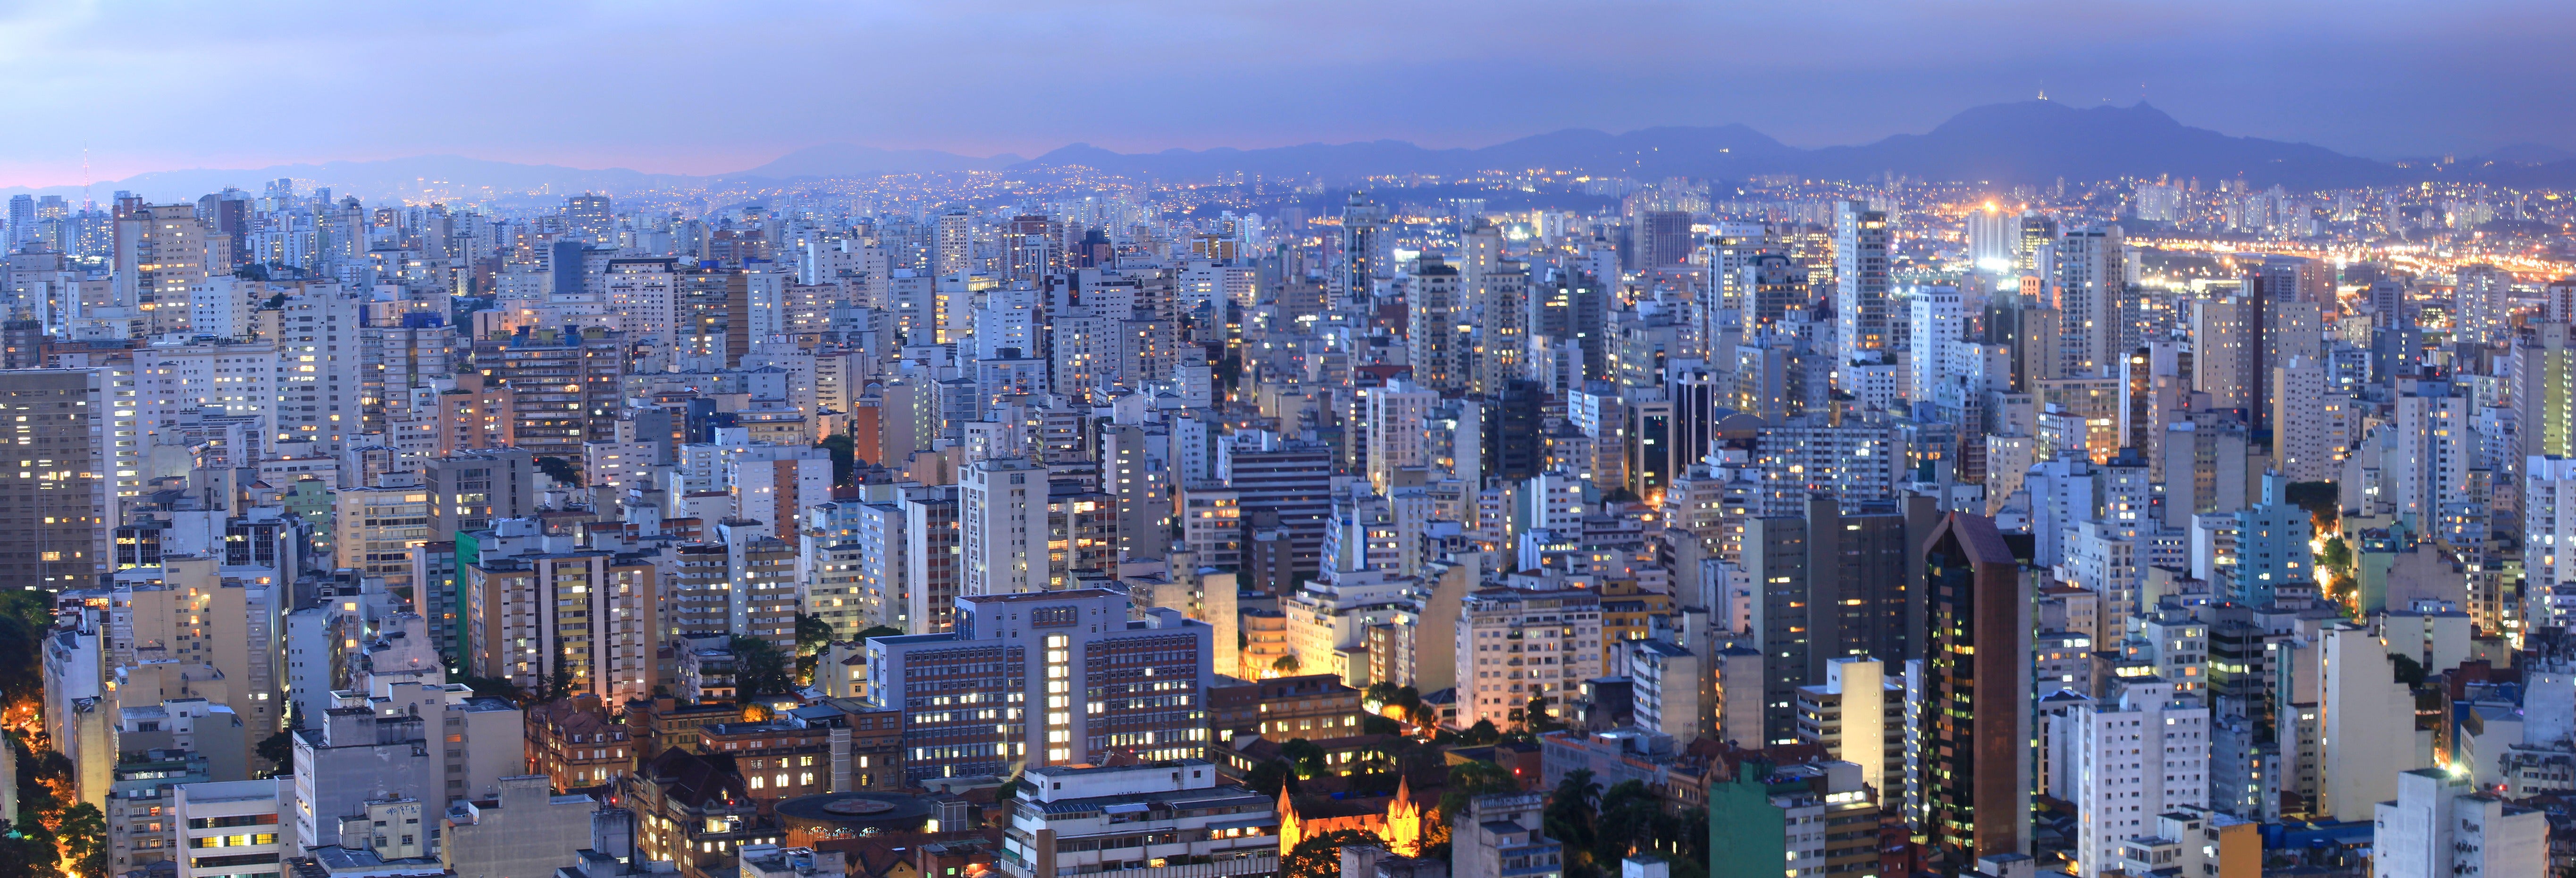 State of Sao Paulo